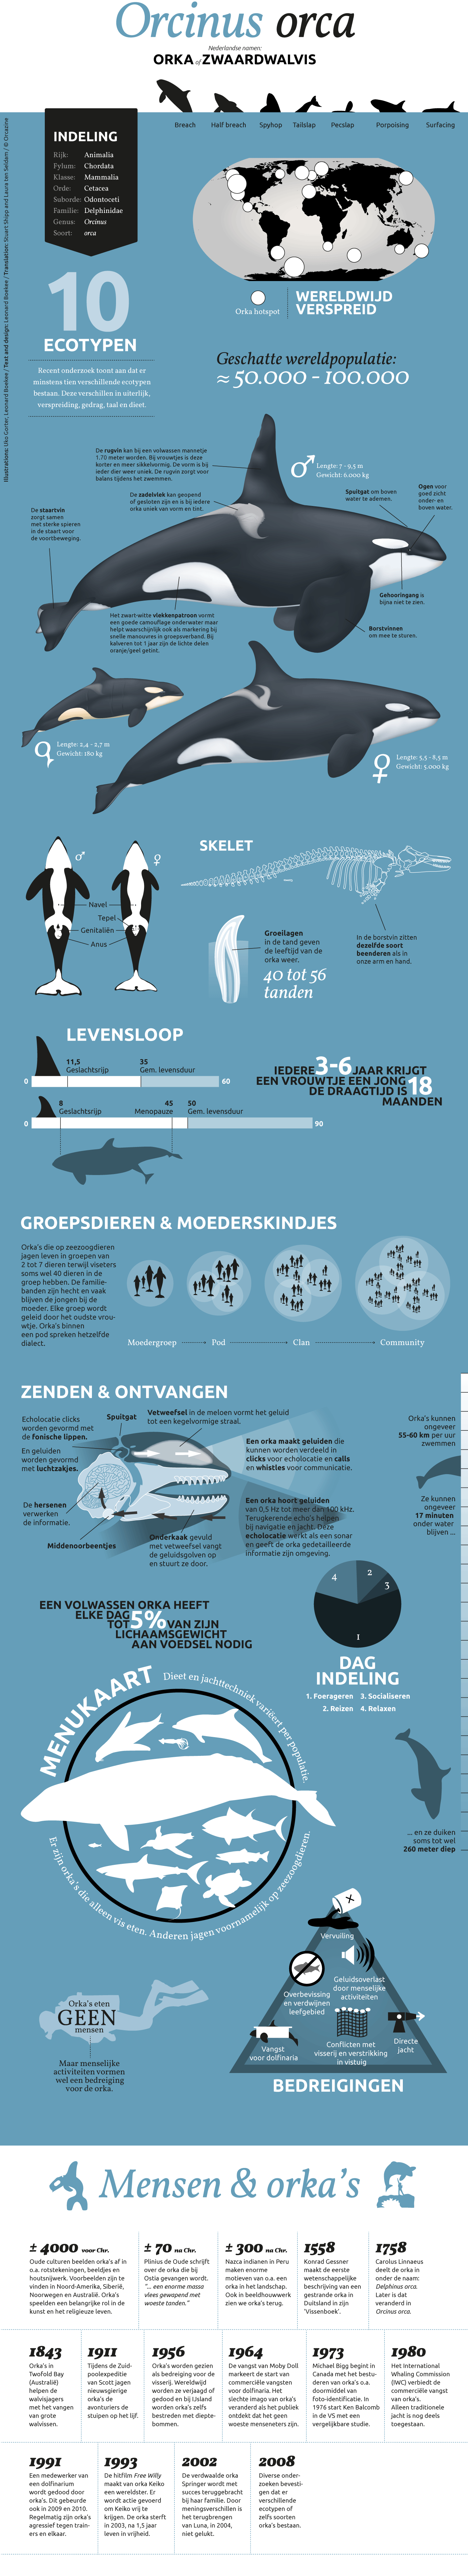 Orcagraphic-NL-WEB